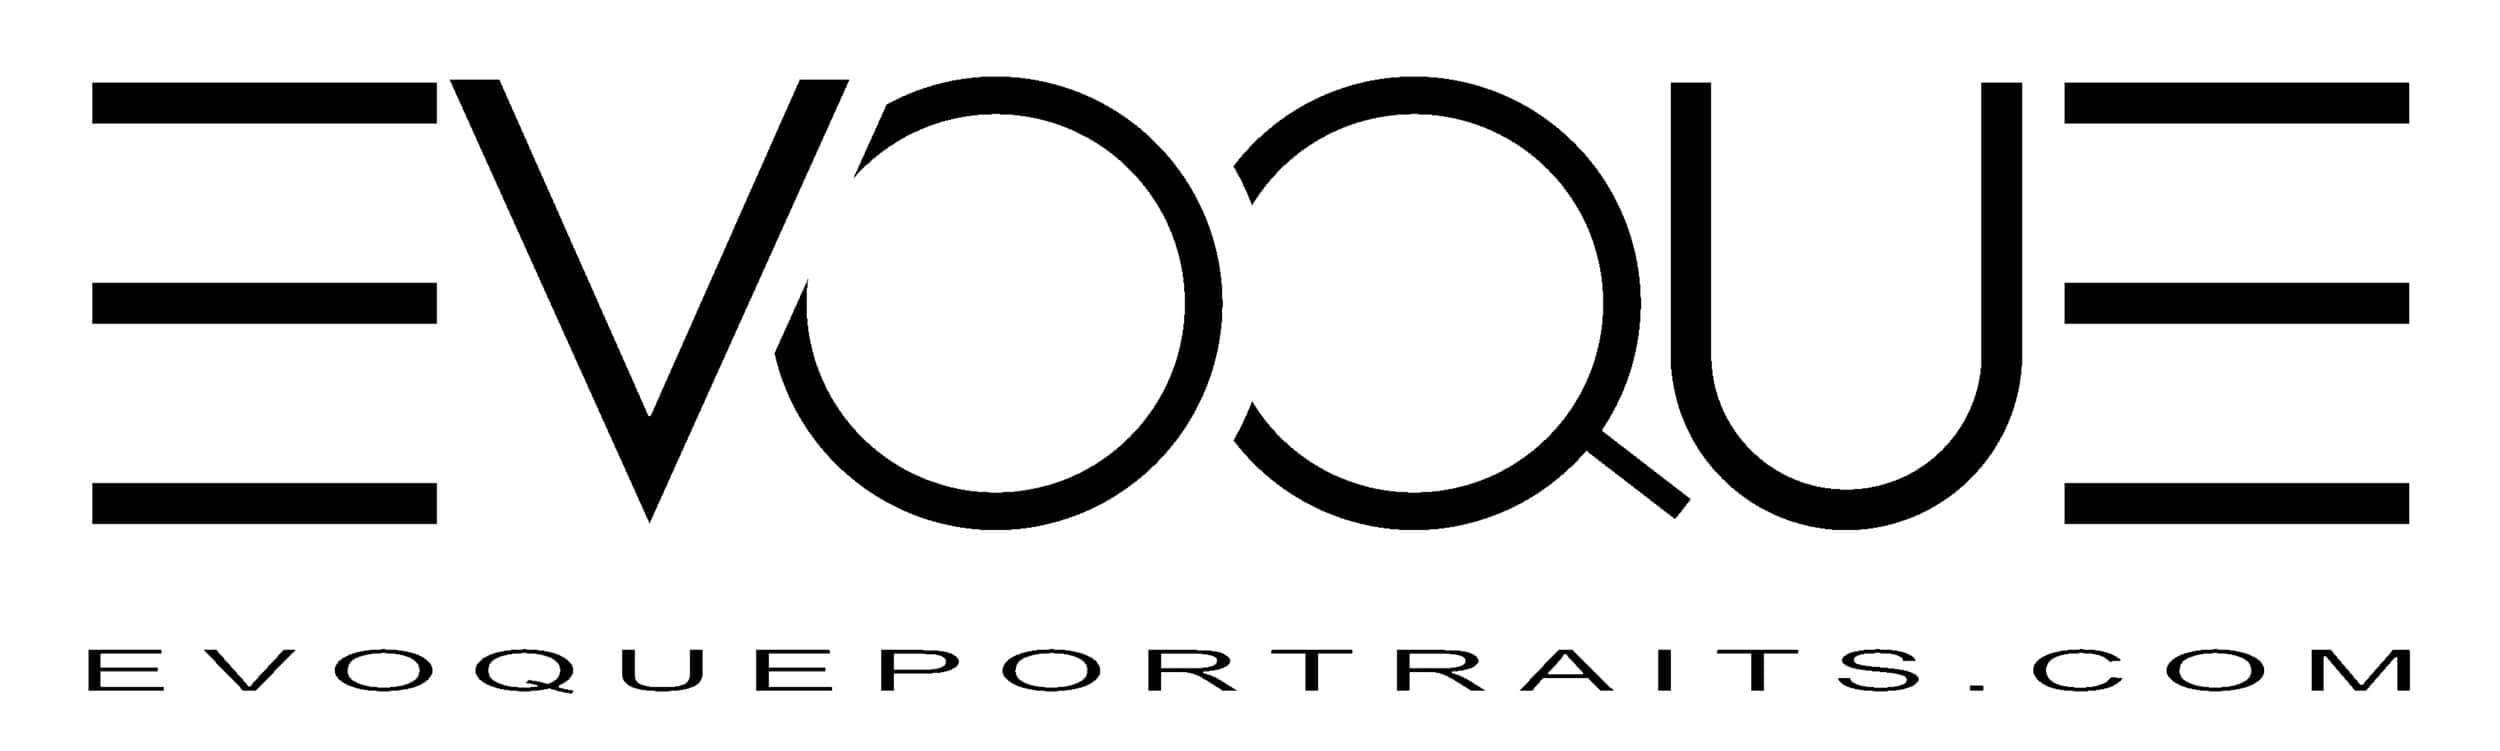 Evoque Portraits Logo Wallpaper